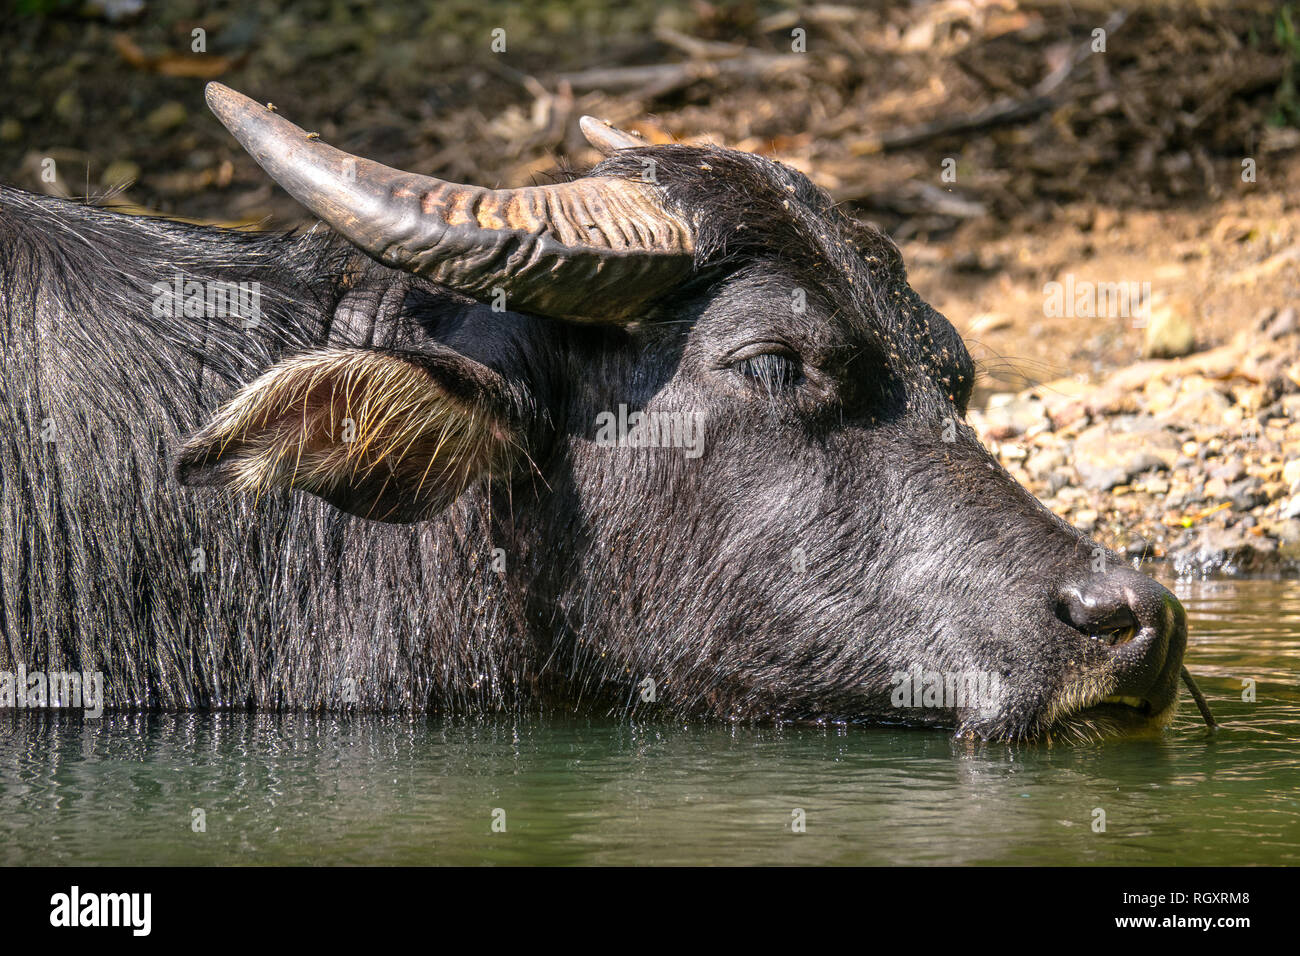 Water Buffalo Head - Close Up, Wading in Philippine River - Palawan Stock Photo